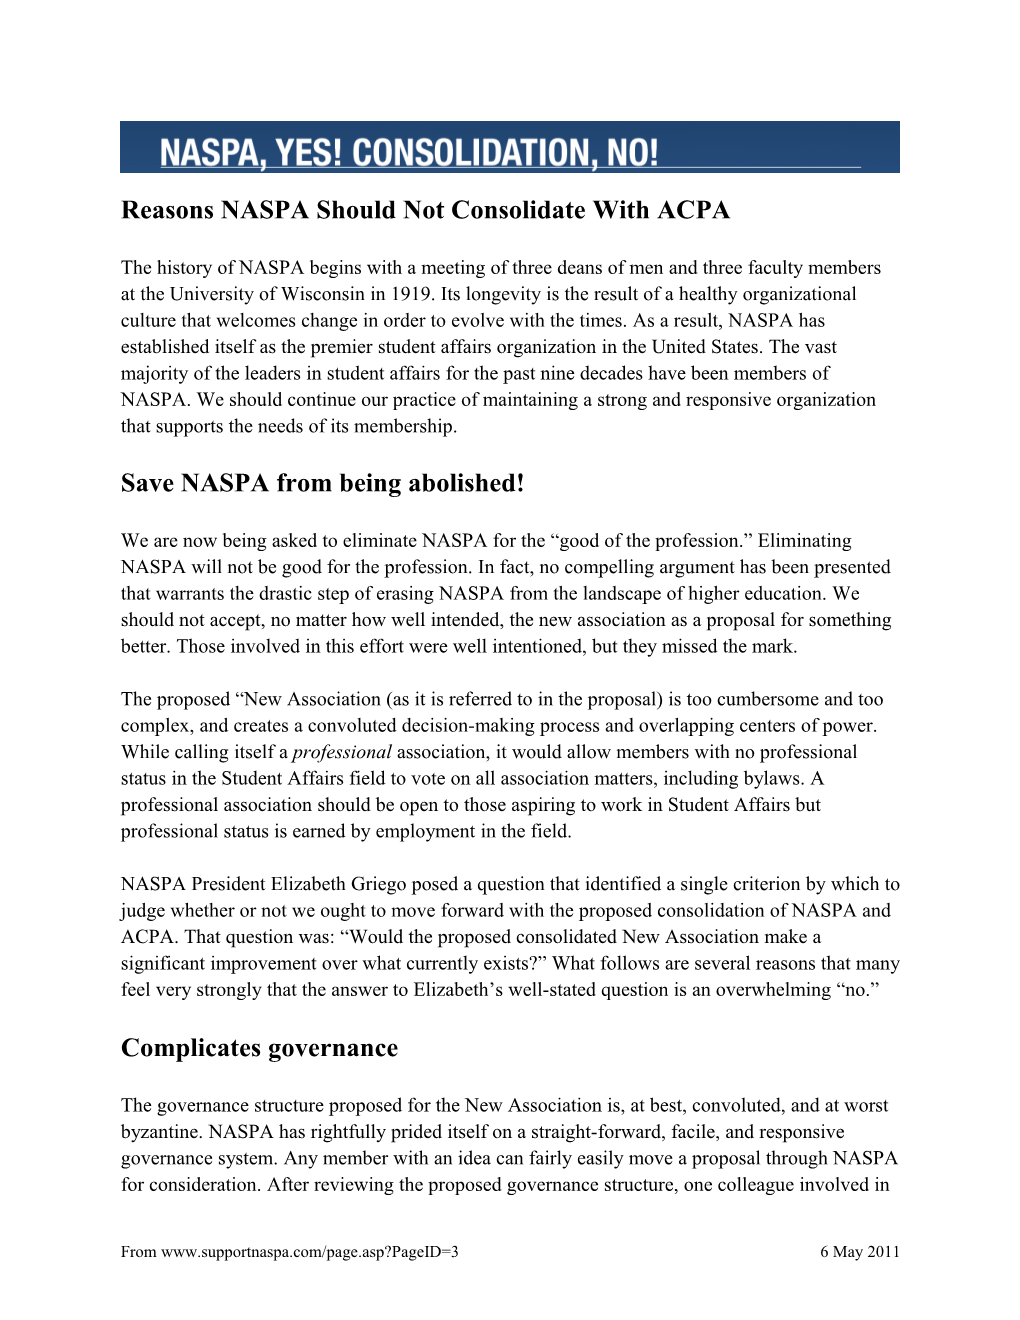 Reasons NASPA Should Not Consolidate with ACPA